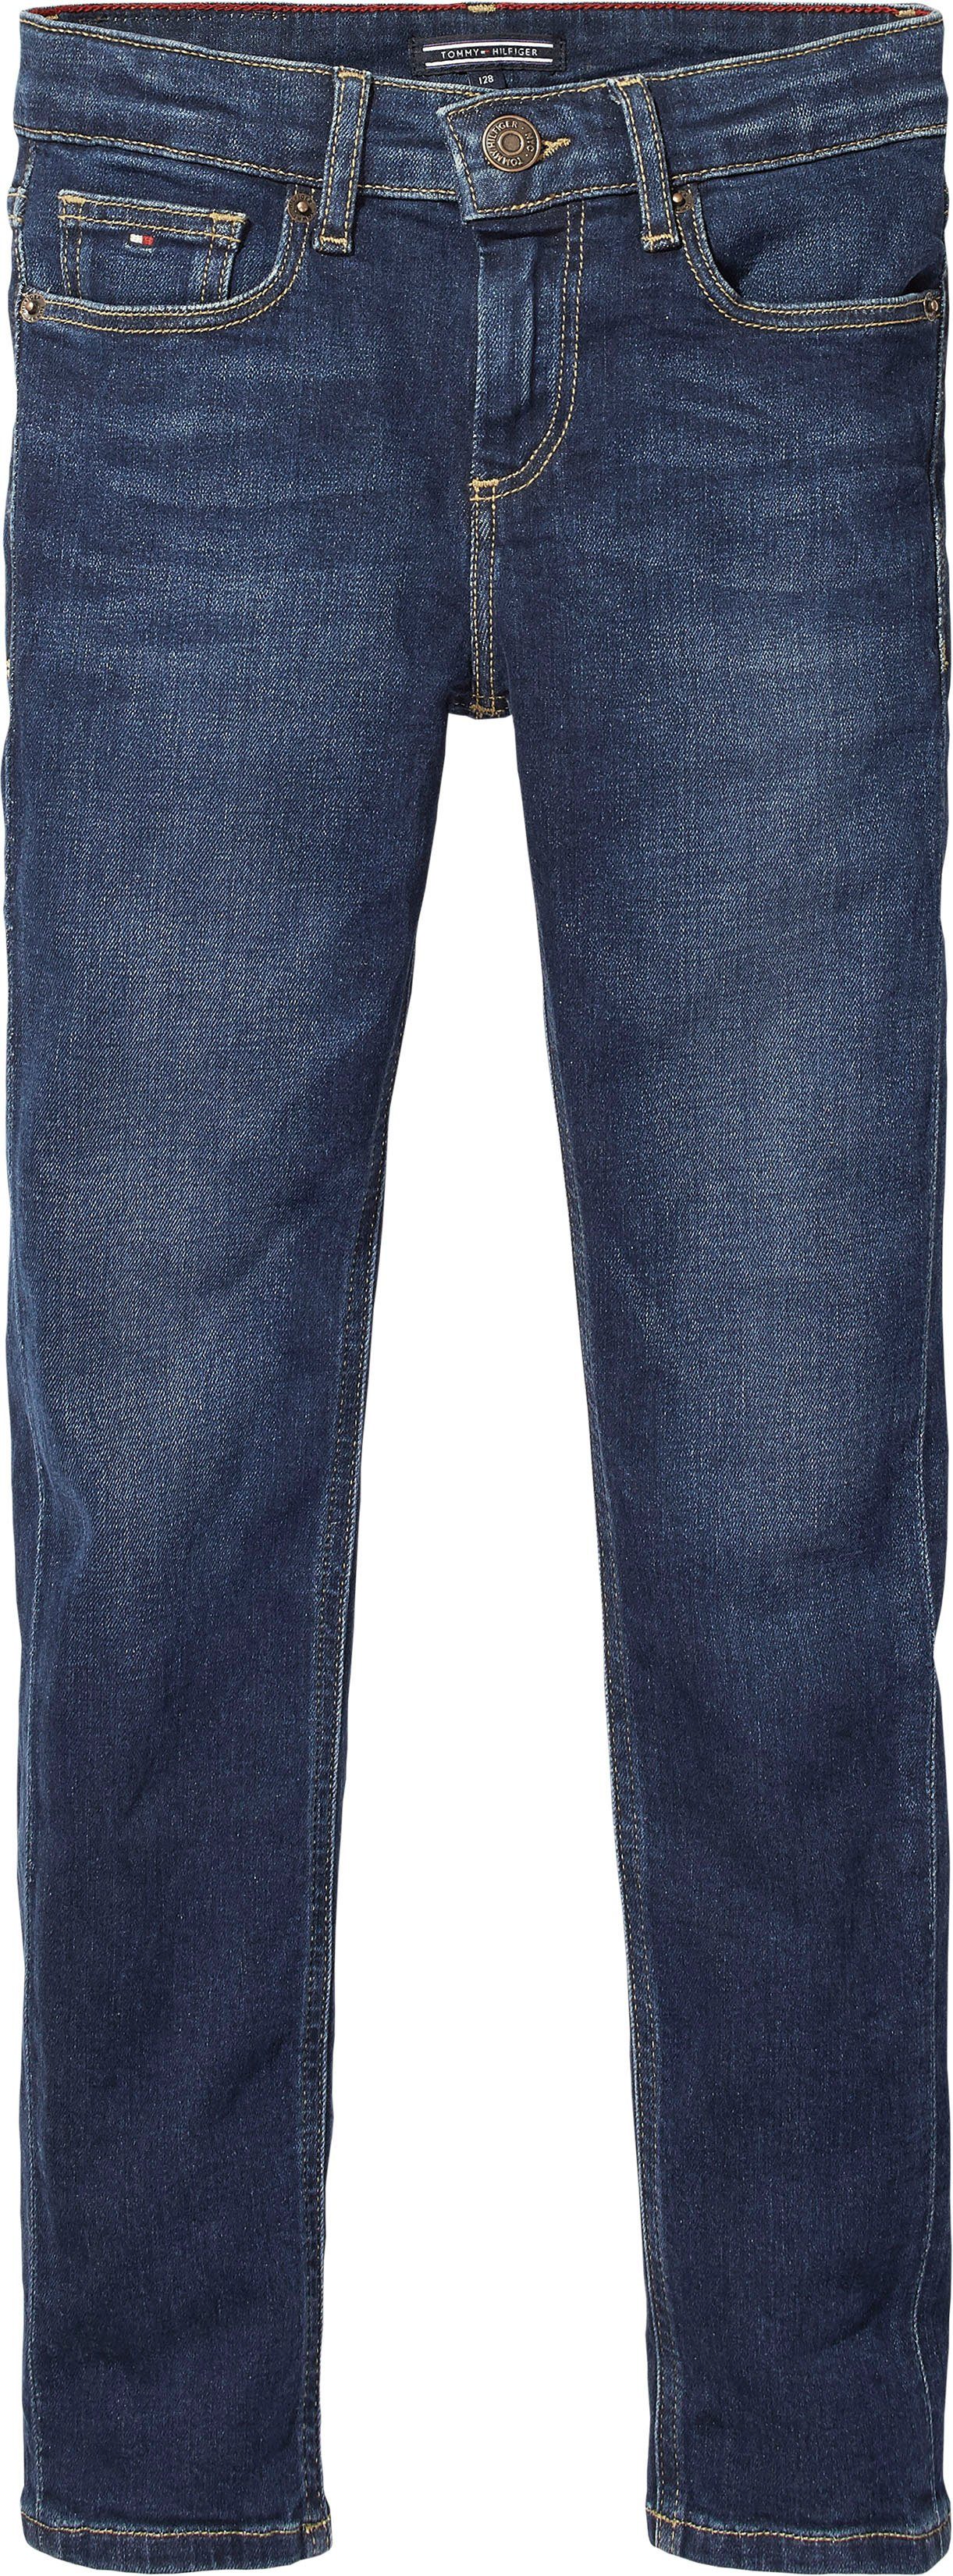 SCANTON Hilfiger Stretch-Jeans Tommy